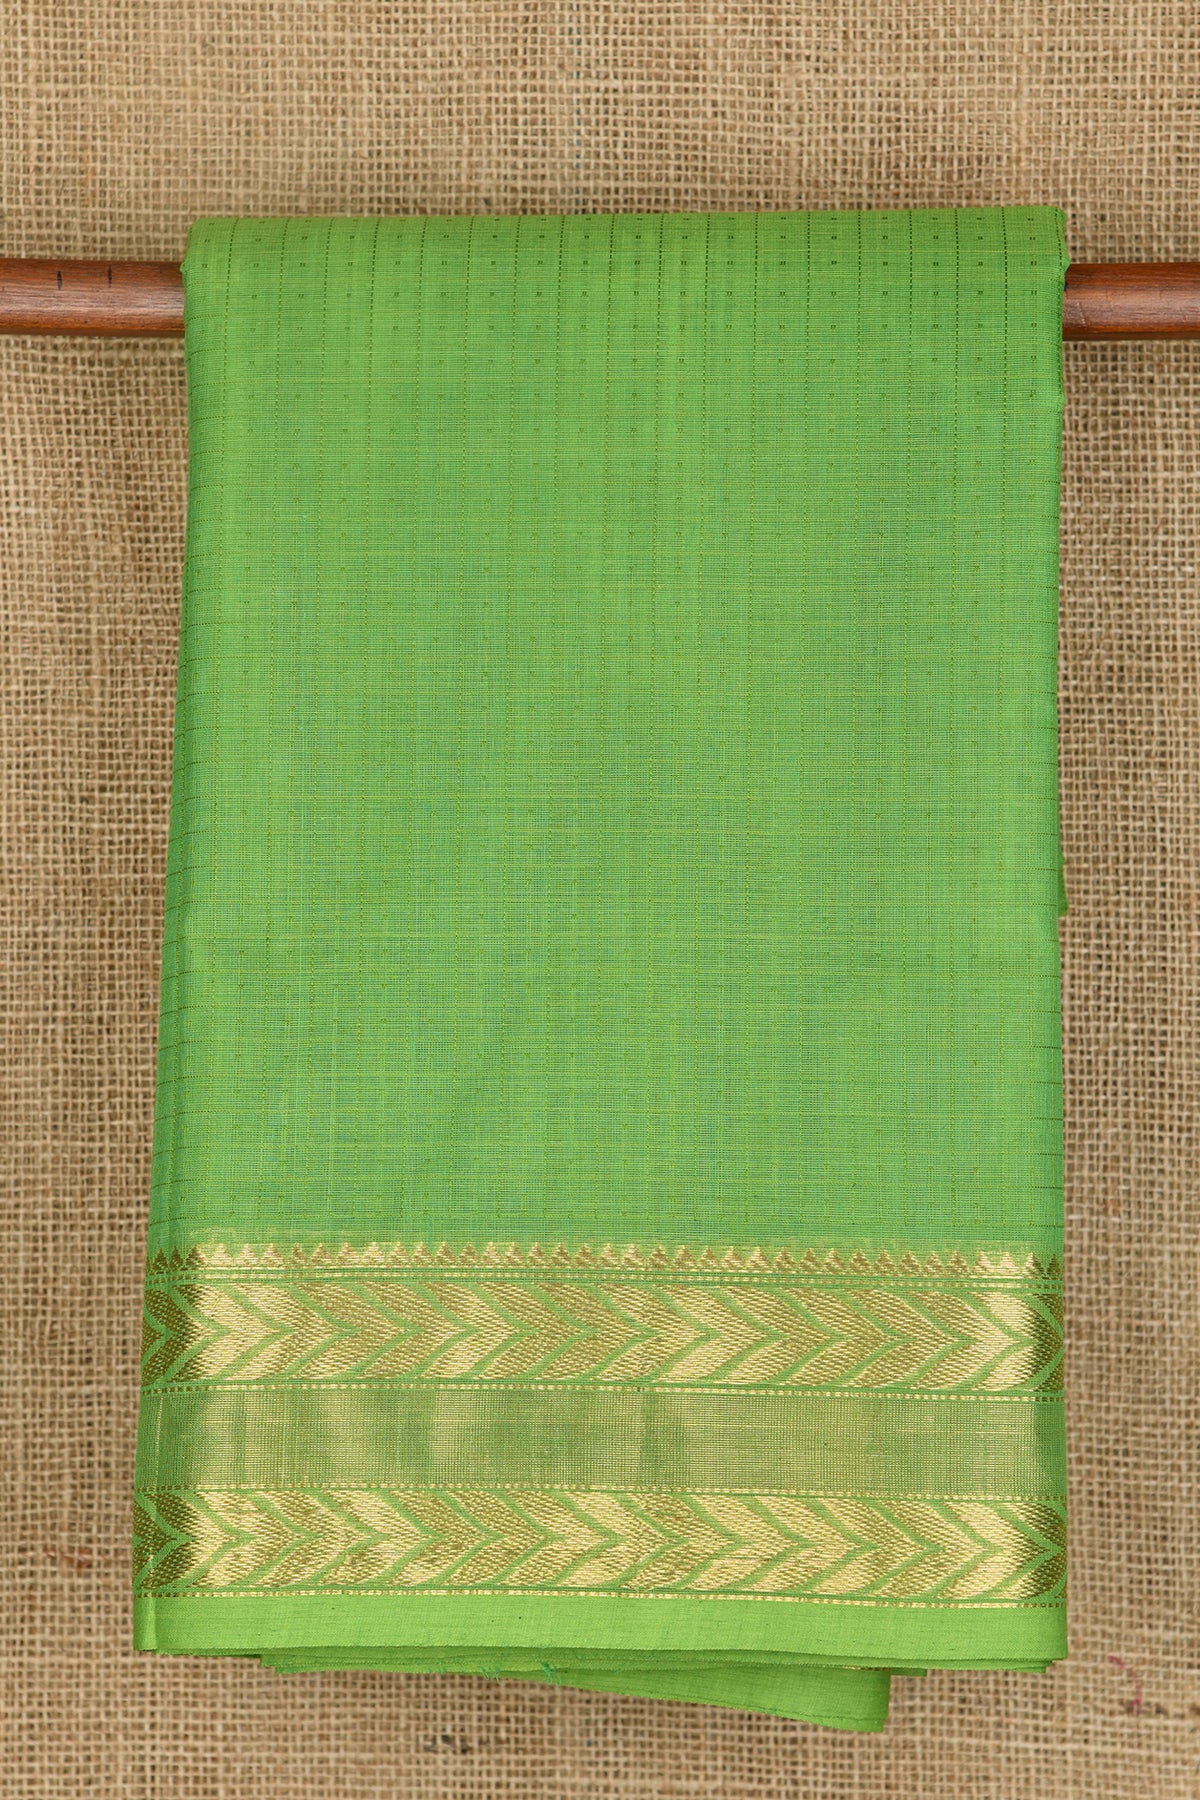 Minimal Design Zari Border Parrot Green Plain Coimbatore Cotton Saree